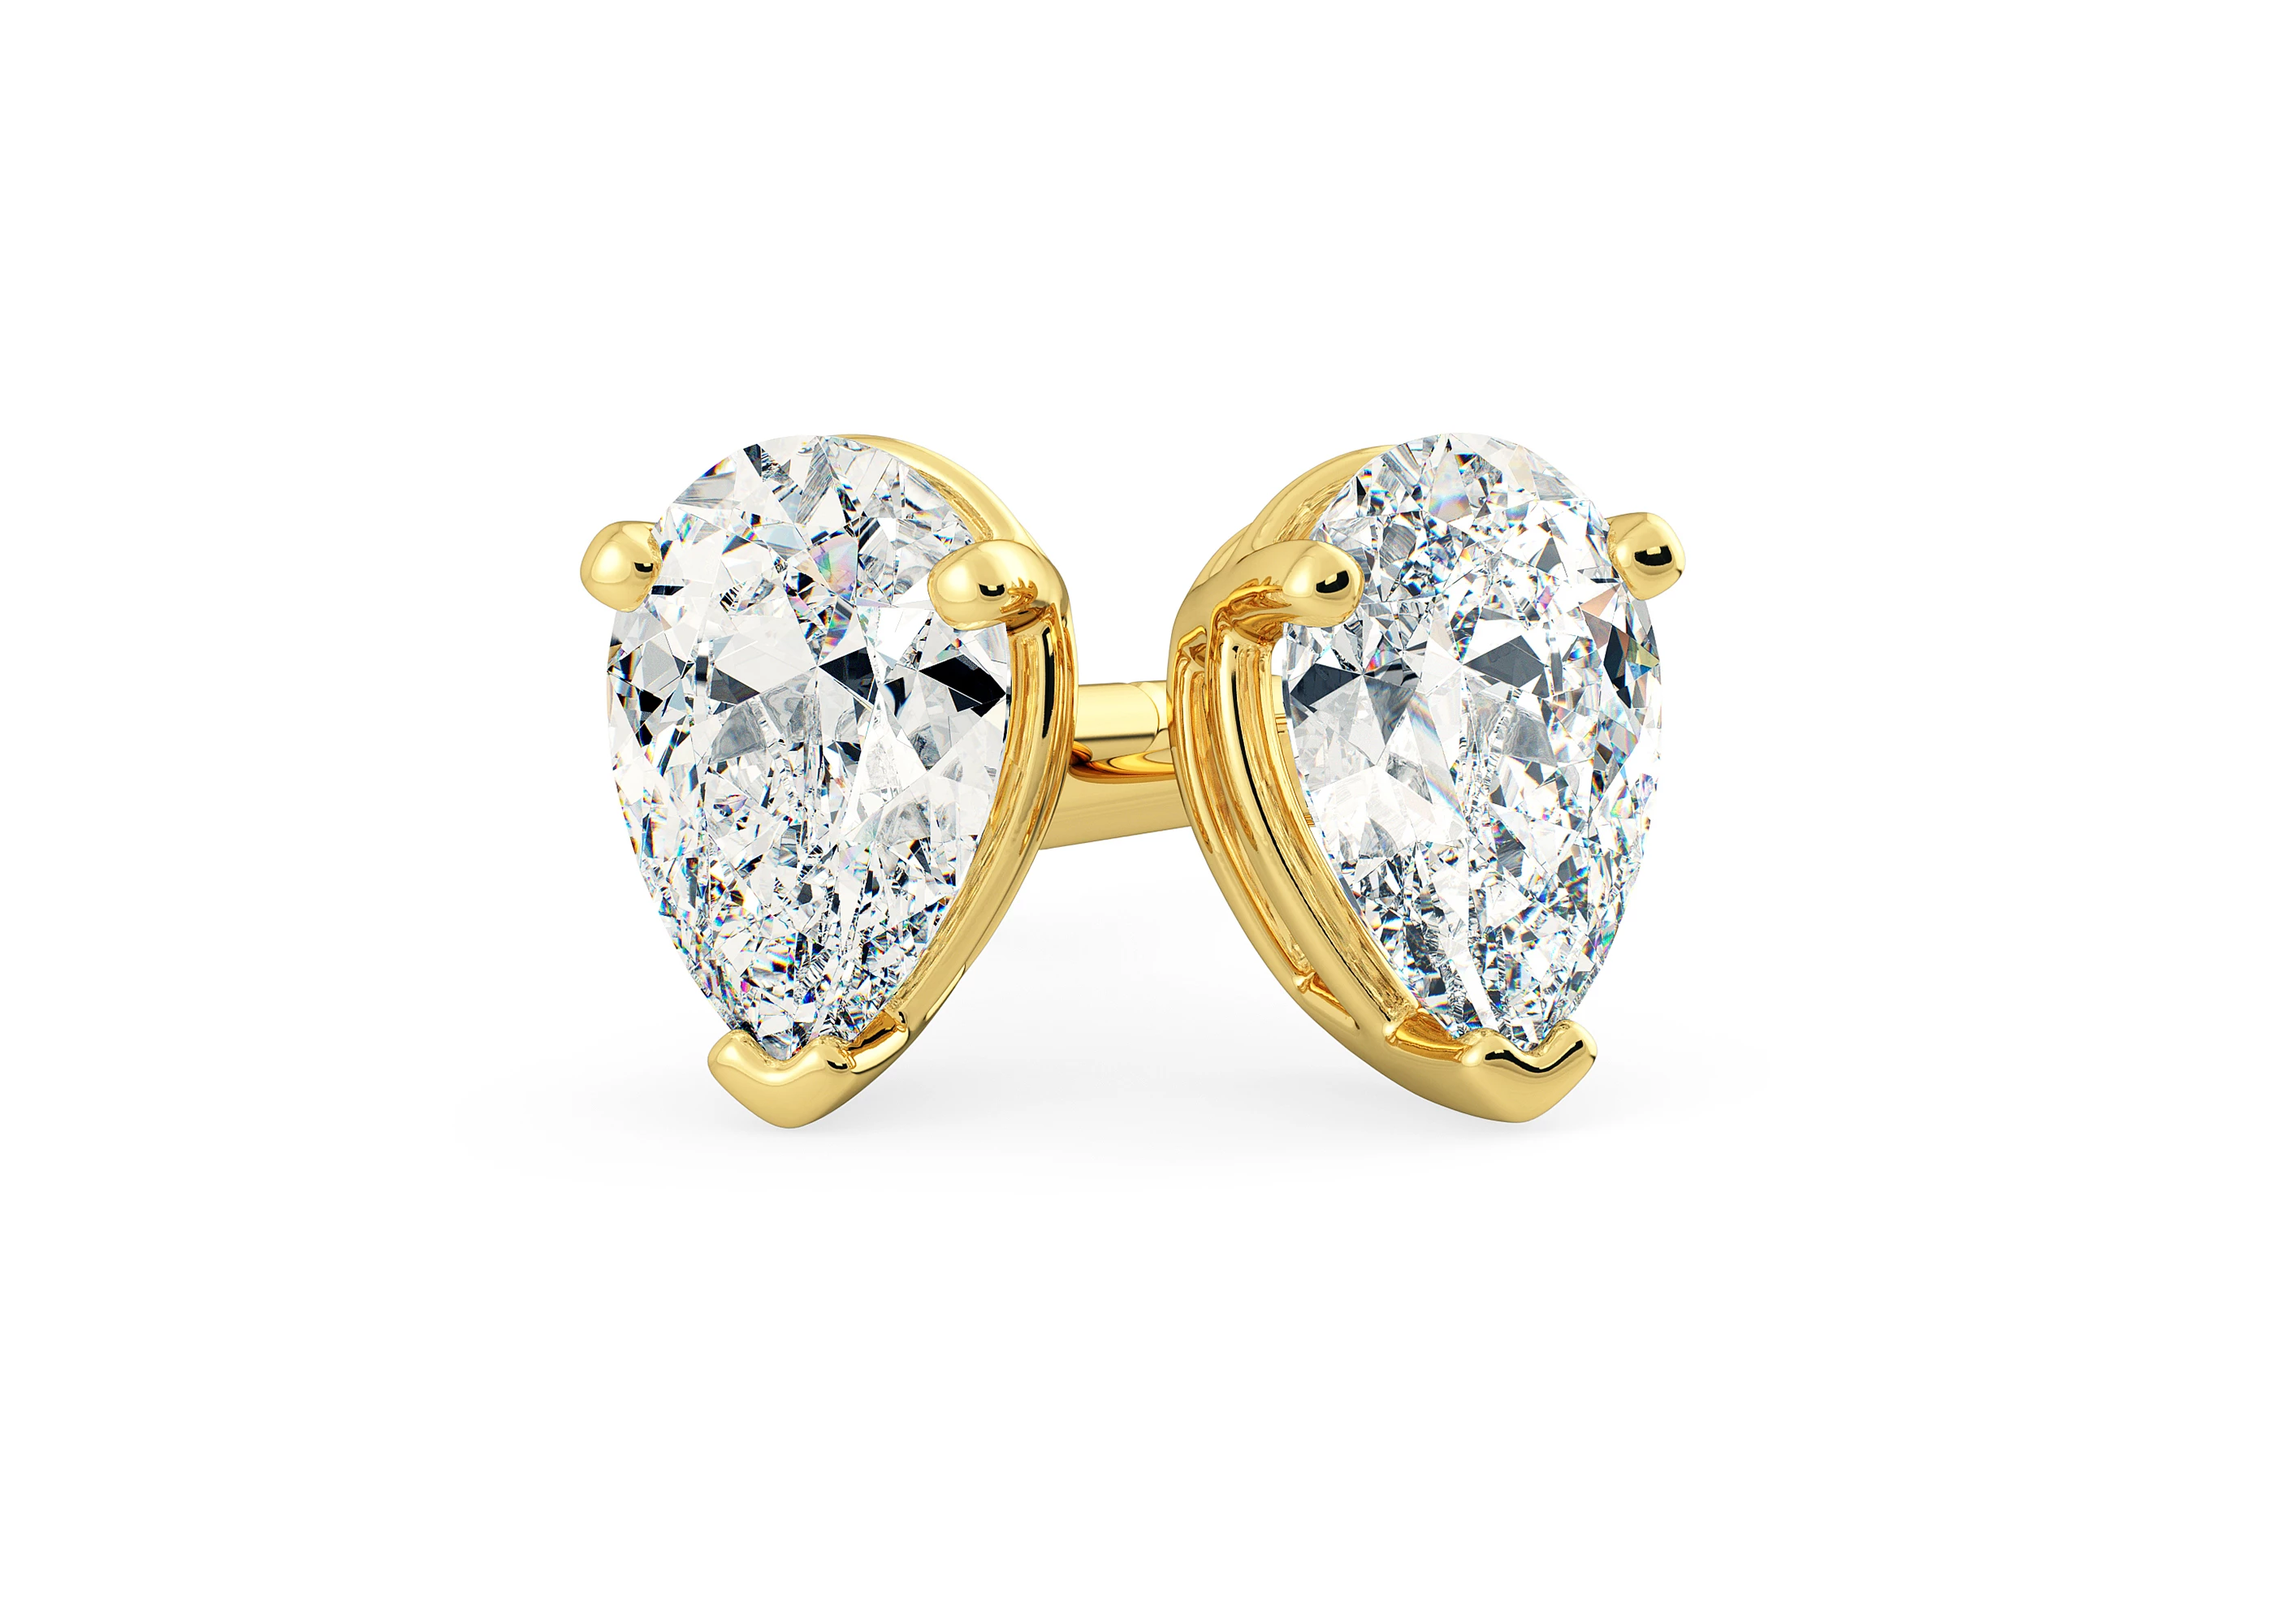 Two Carat Pear Diamond Stud Earrings in 18K Yellow Gold